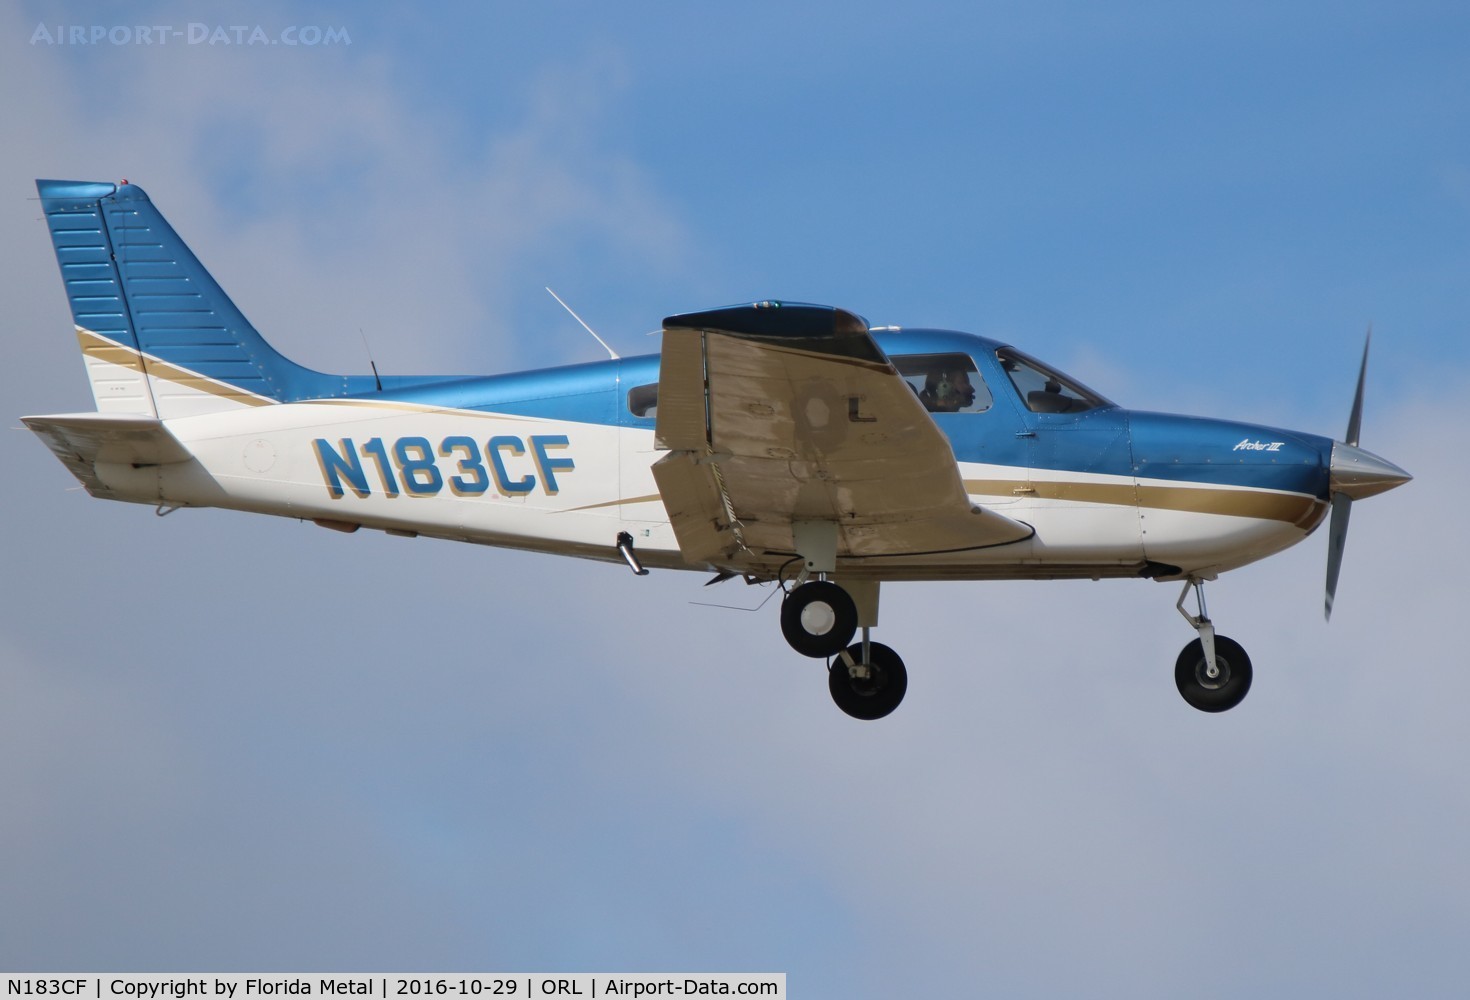 N183CF, 1999 Piper PA-28-181 C/N 2843232, PA-28-181